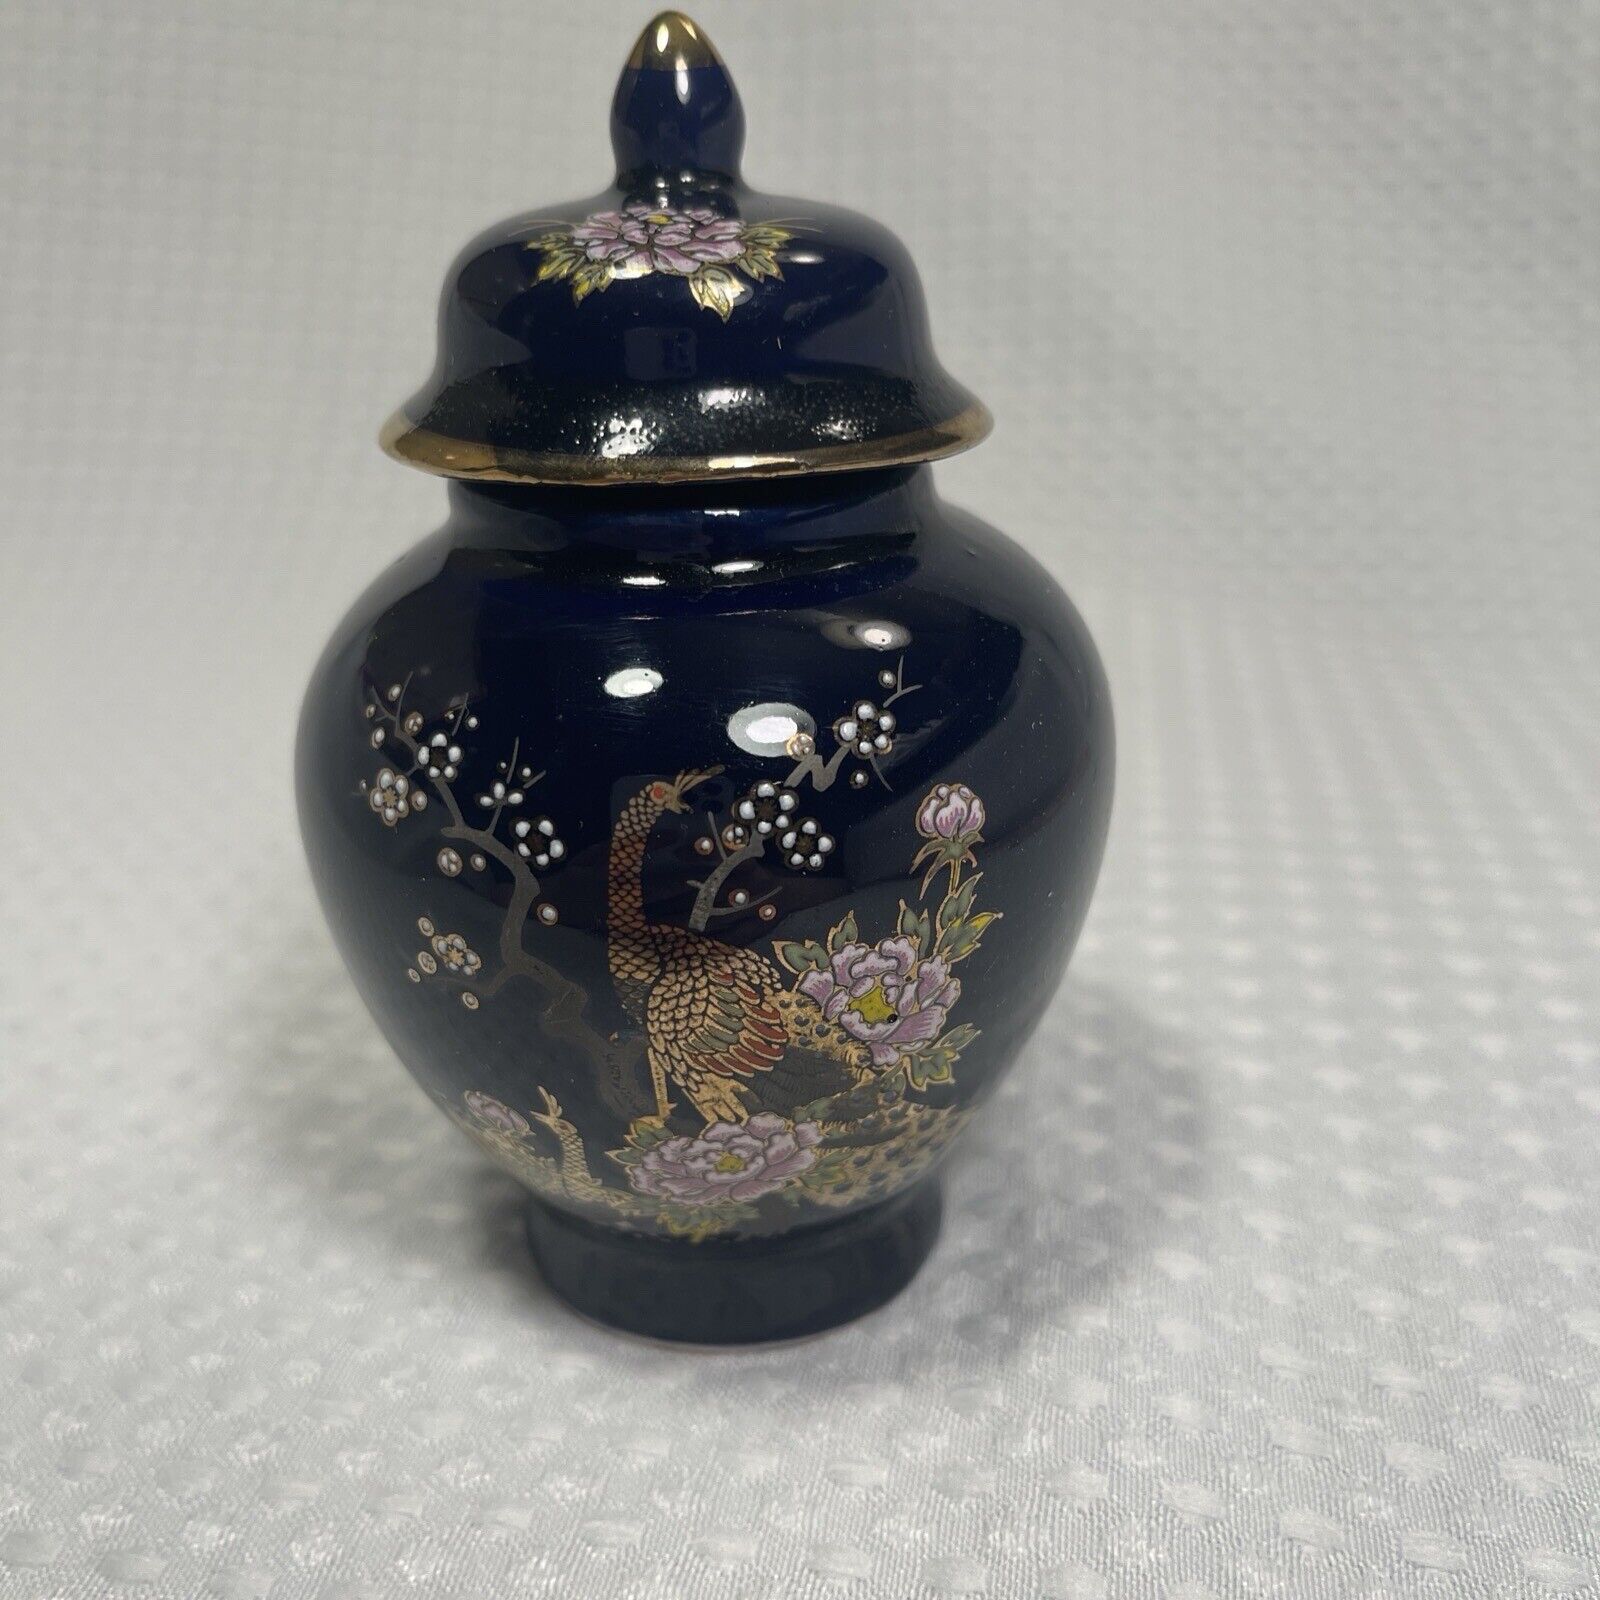 Vintage Blue and Gold Floral Peacock Japanese Ceramic Ginger Jar with Lid